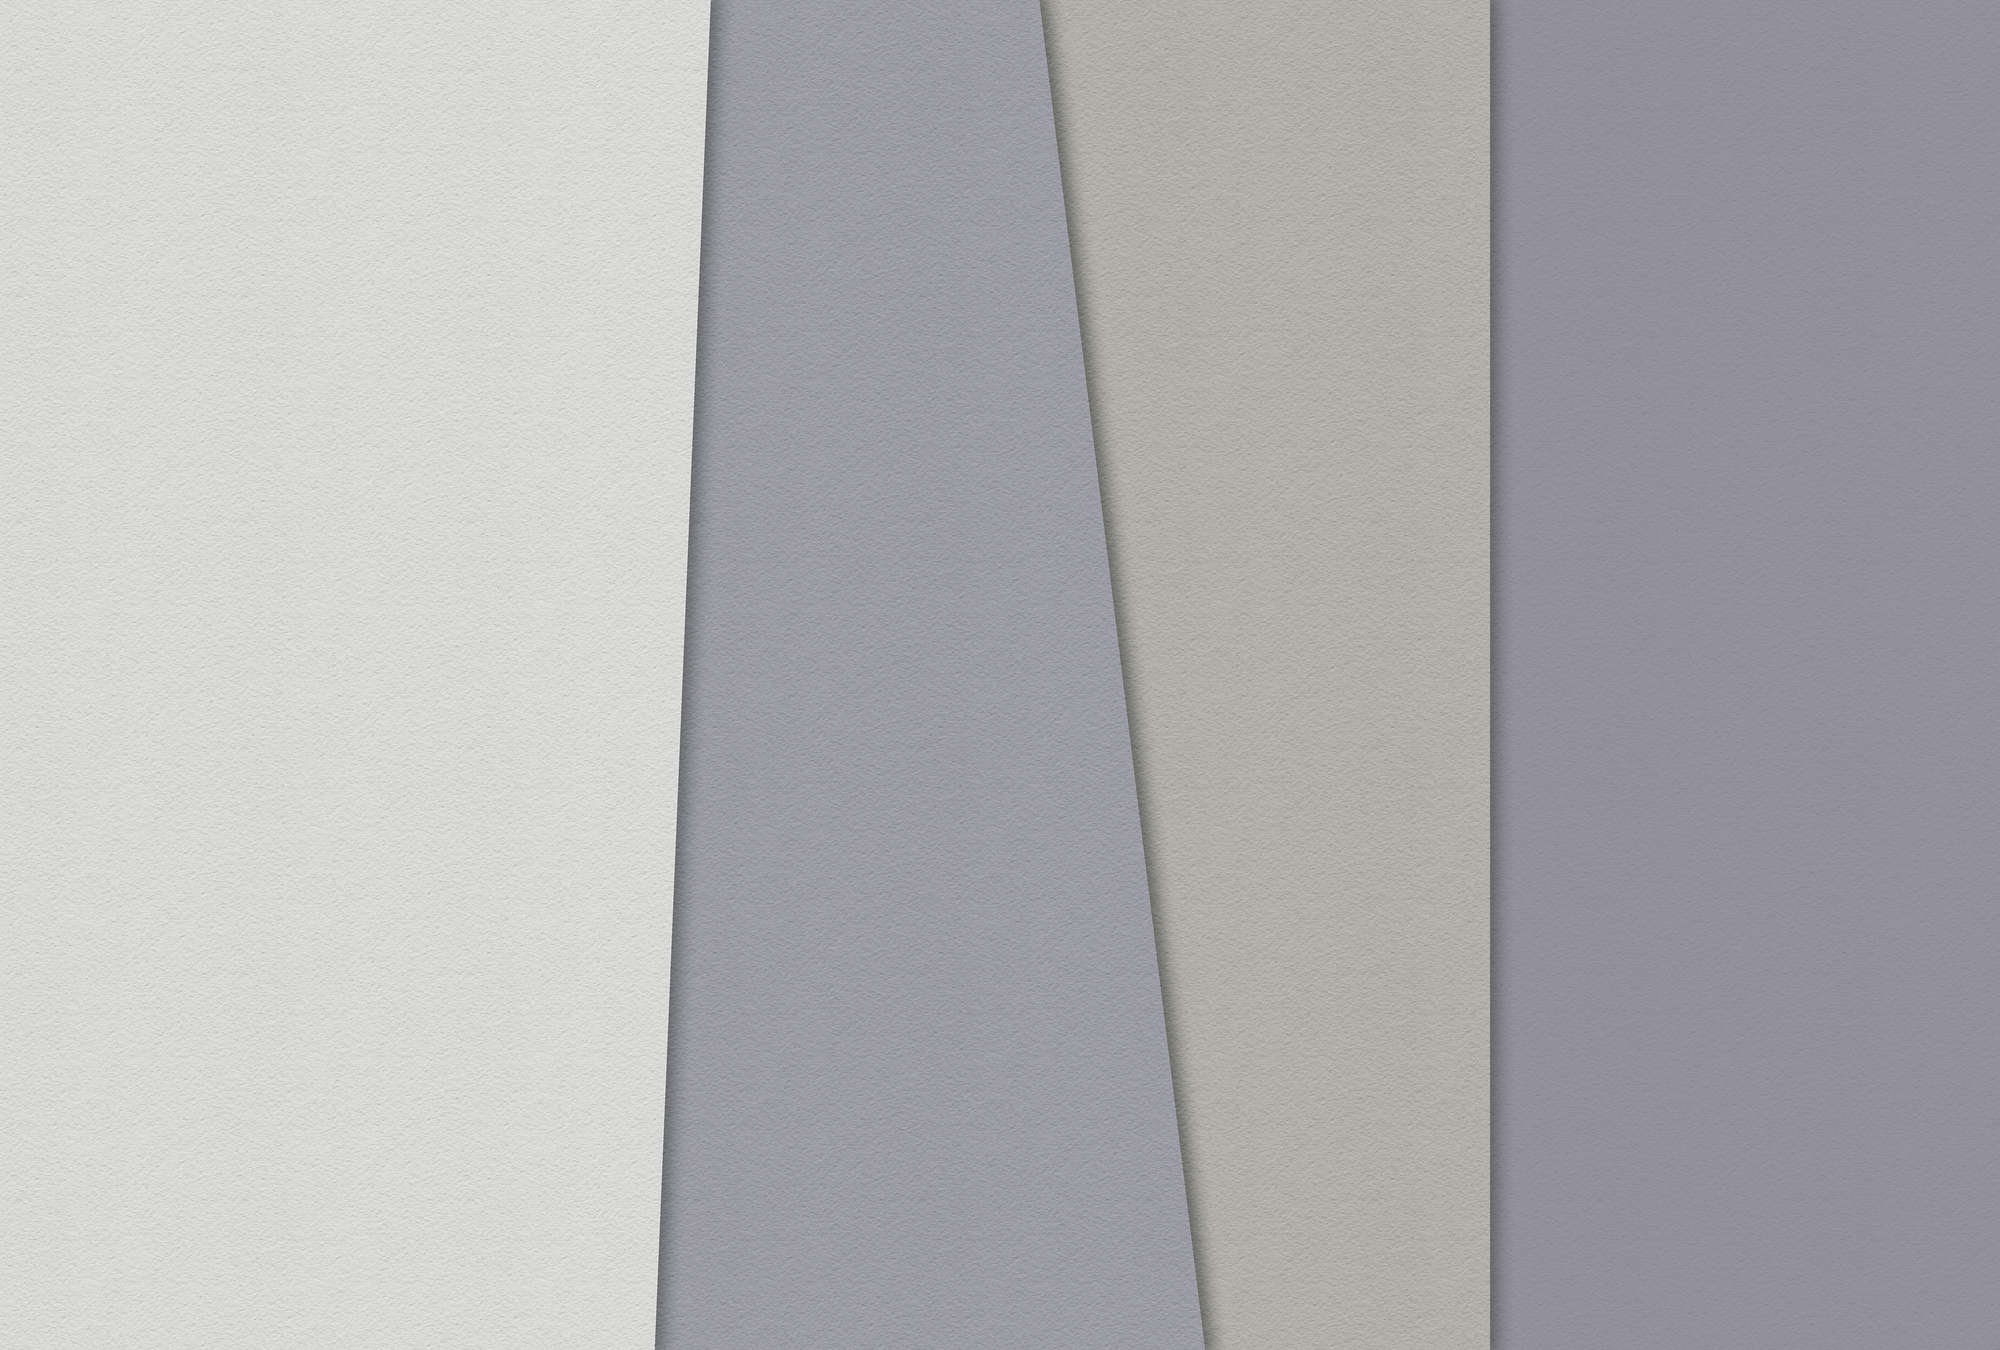             Layered paper 2 - Grafik Fototapete, Büttenpapier Struktur minimalistisches Design – Creme, Grün | Perlmutt Glattvlies
        